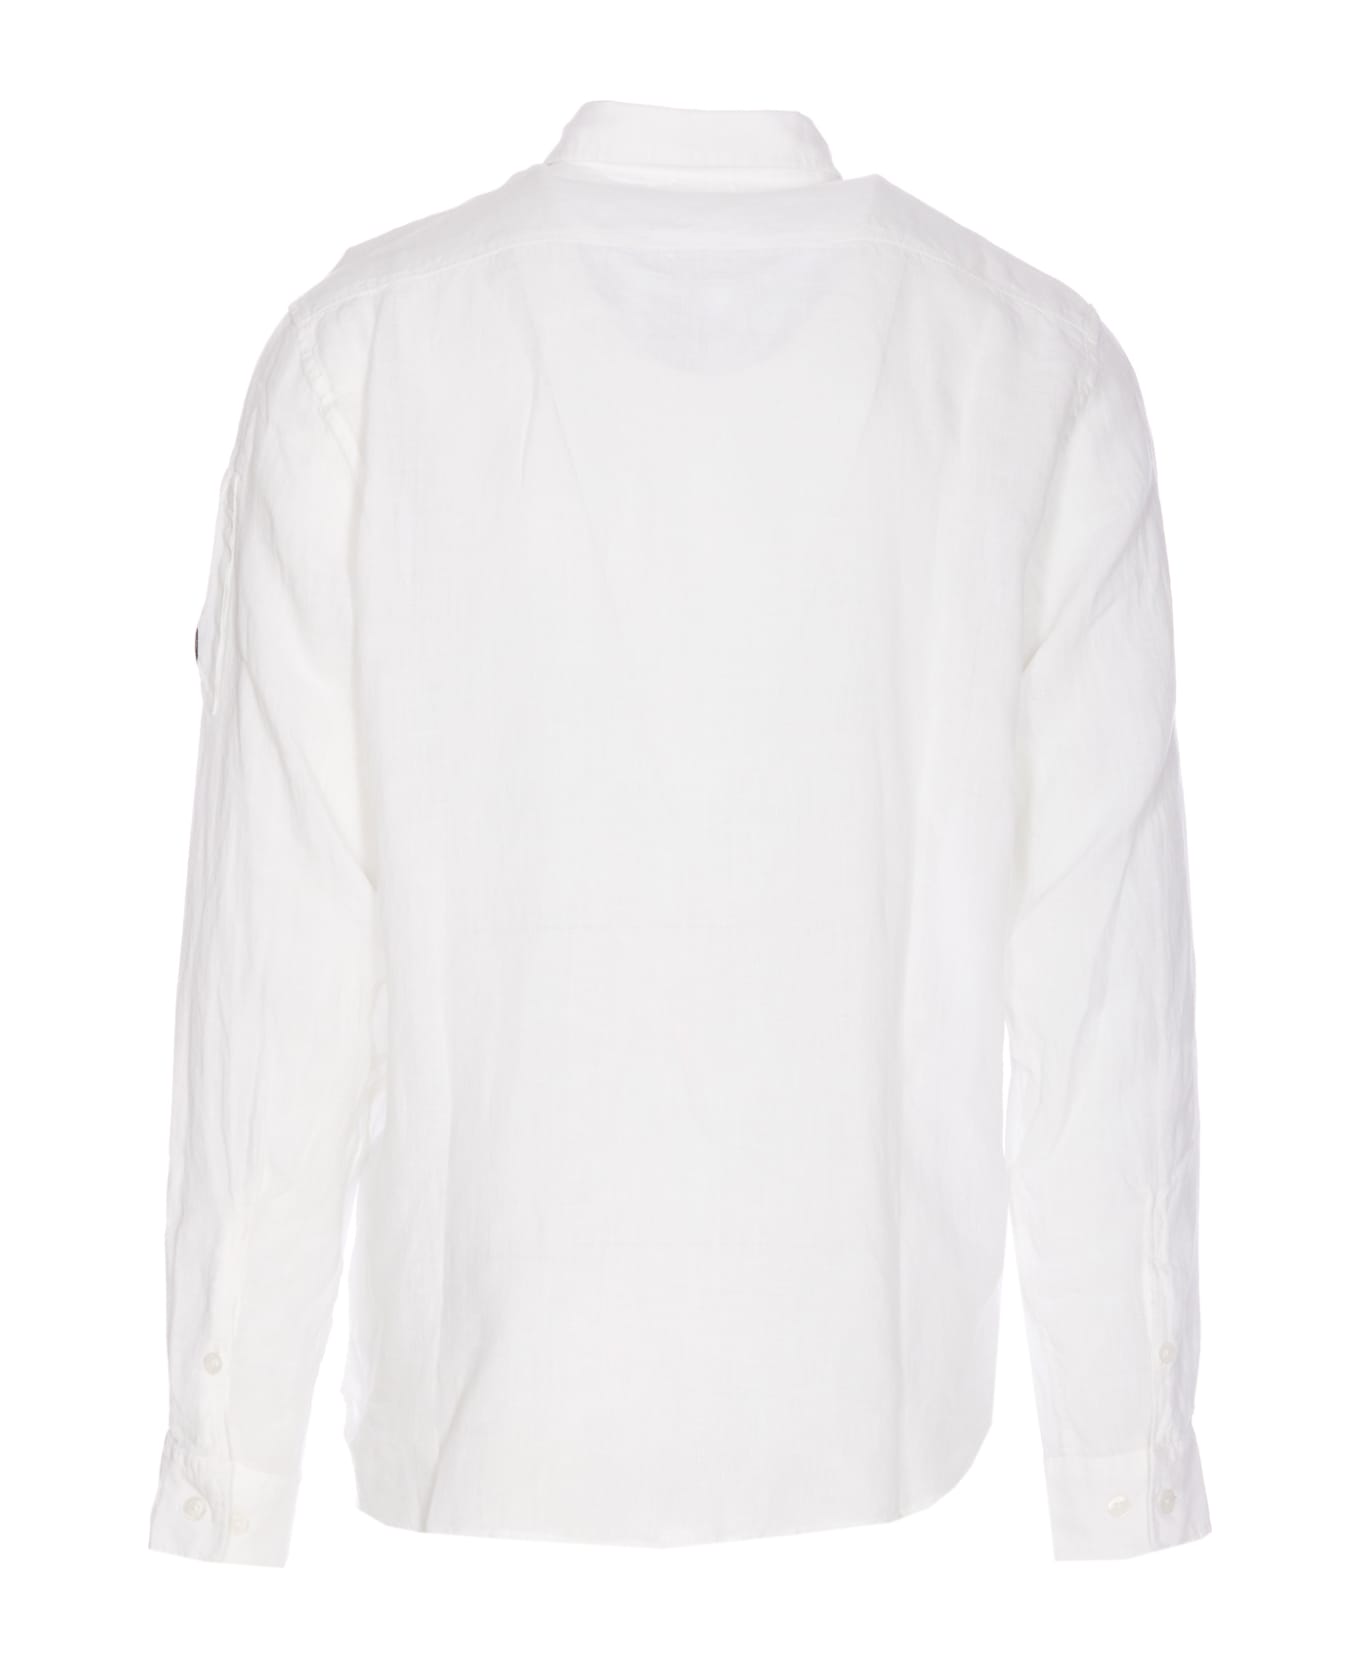 C.P. Company Logo Linen Shirt - White